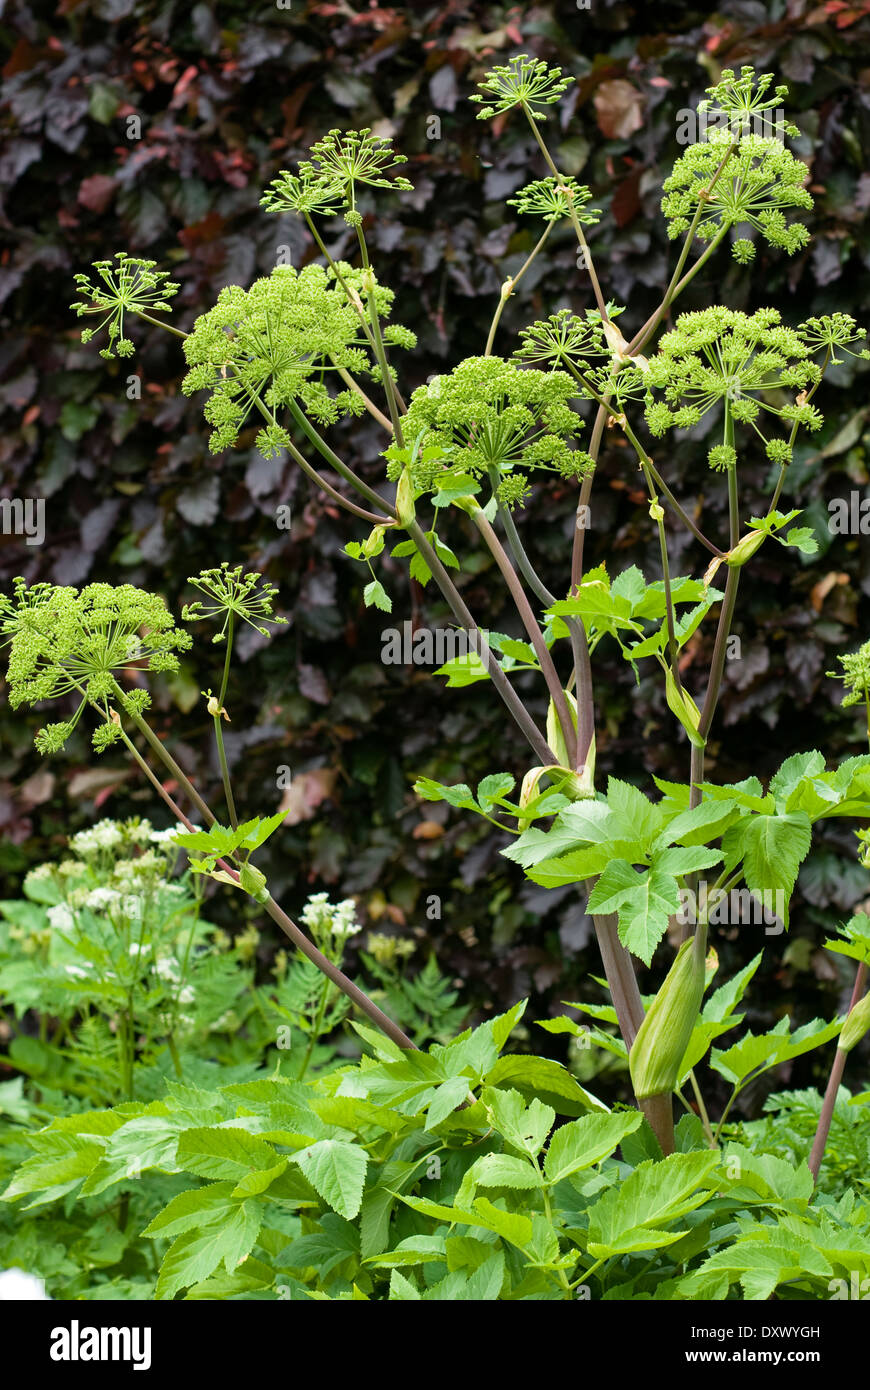 Angelica archangelica, Wild Celery. Herb. July. Bright green flowers. Stock Photo